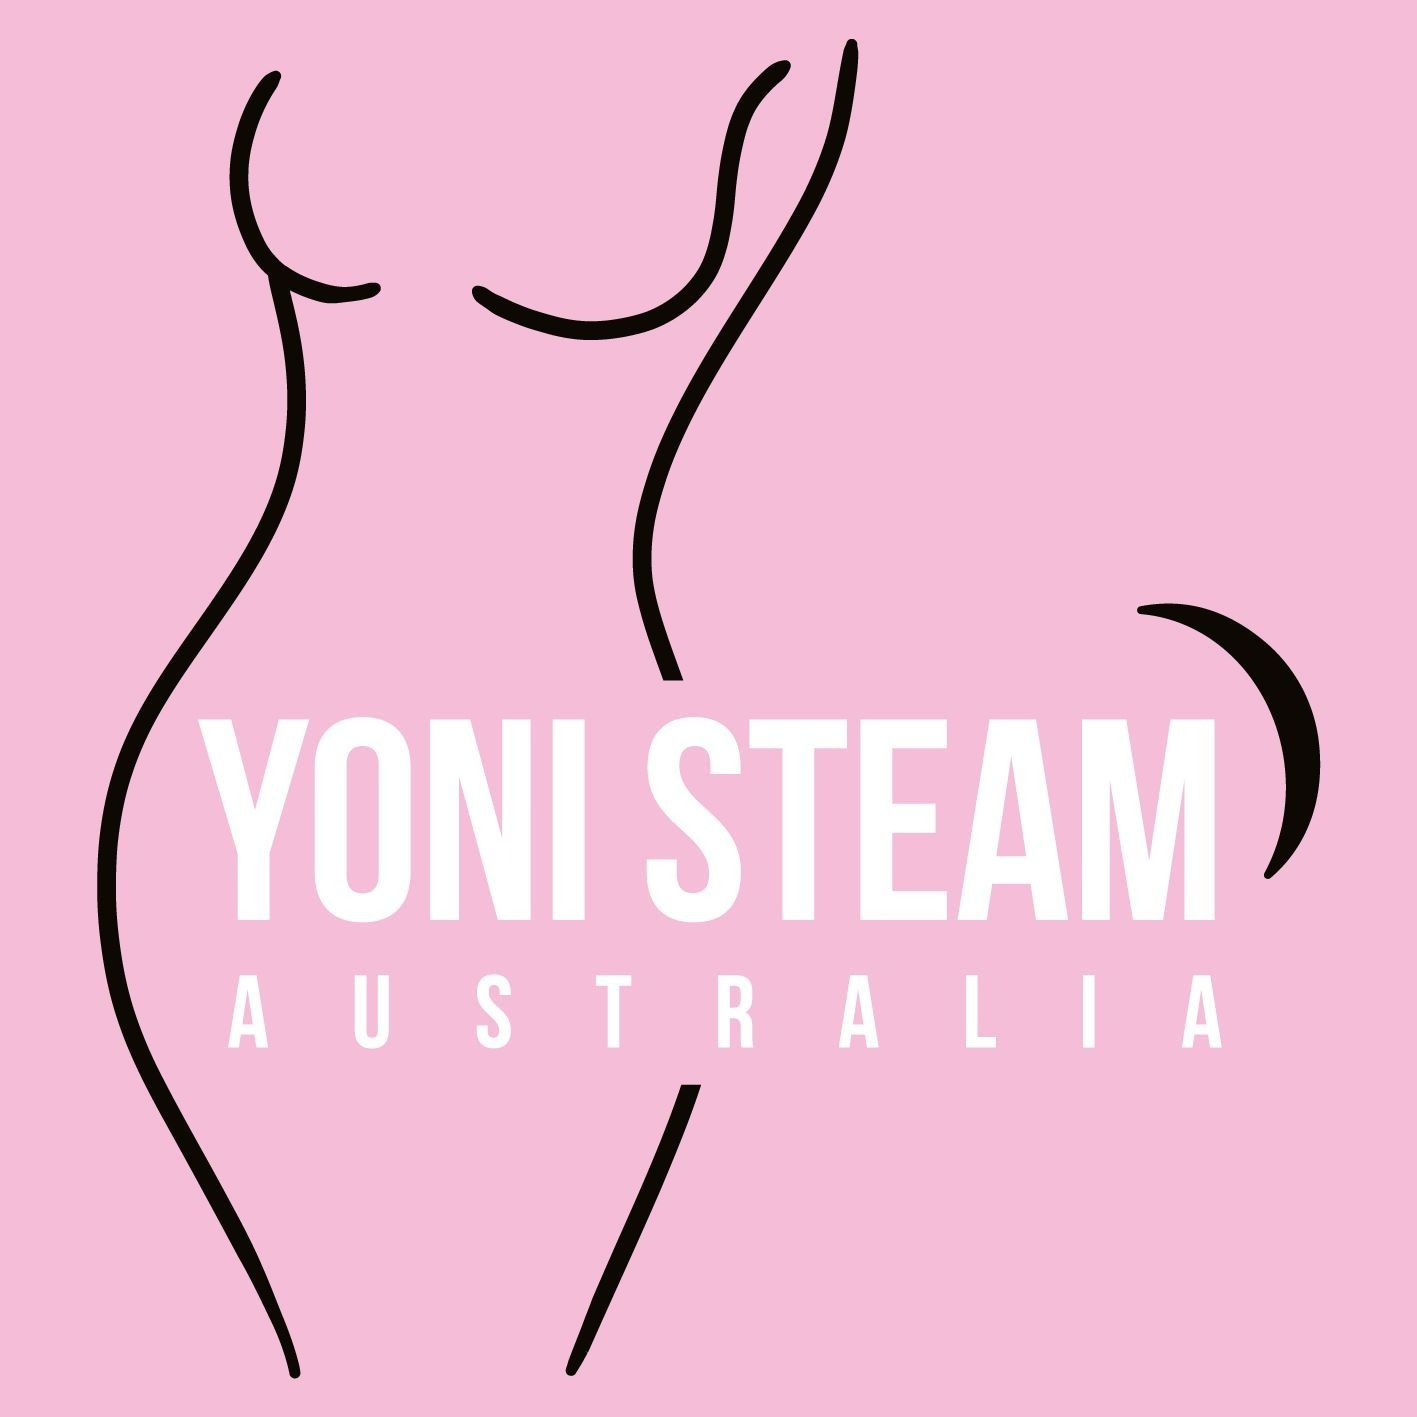 Yoni Steam Australia: Professional Yoni Steaming on the Gold Coast